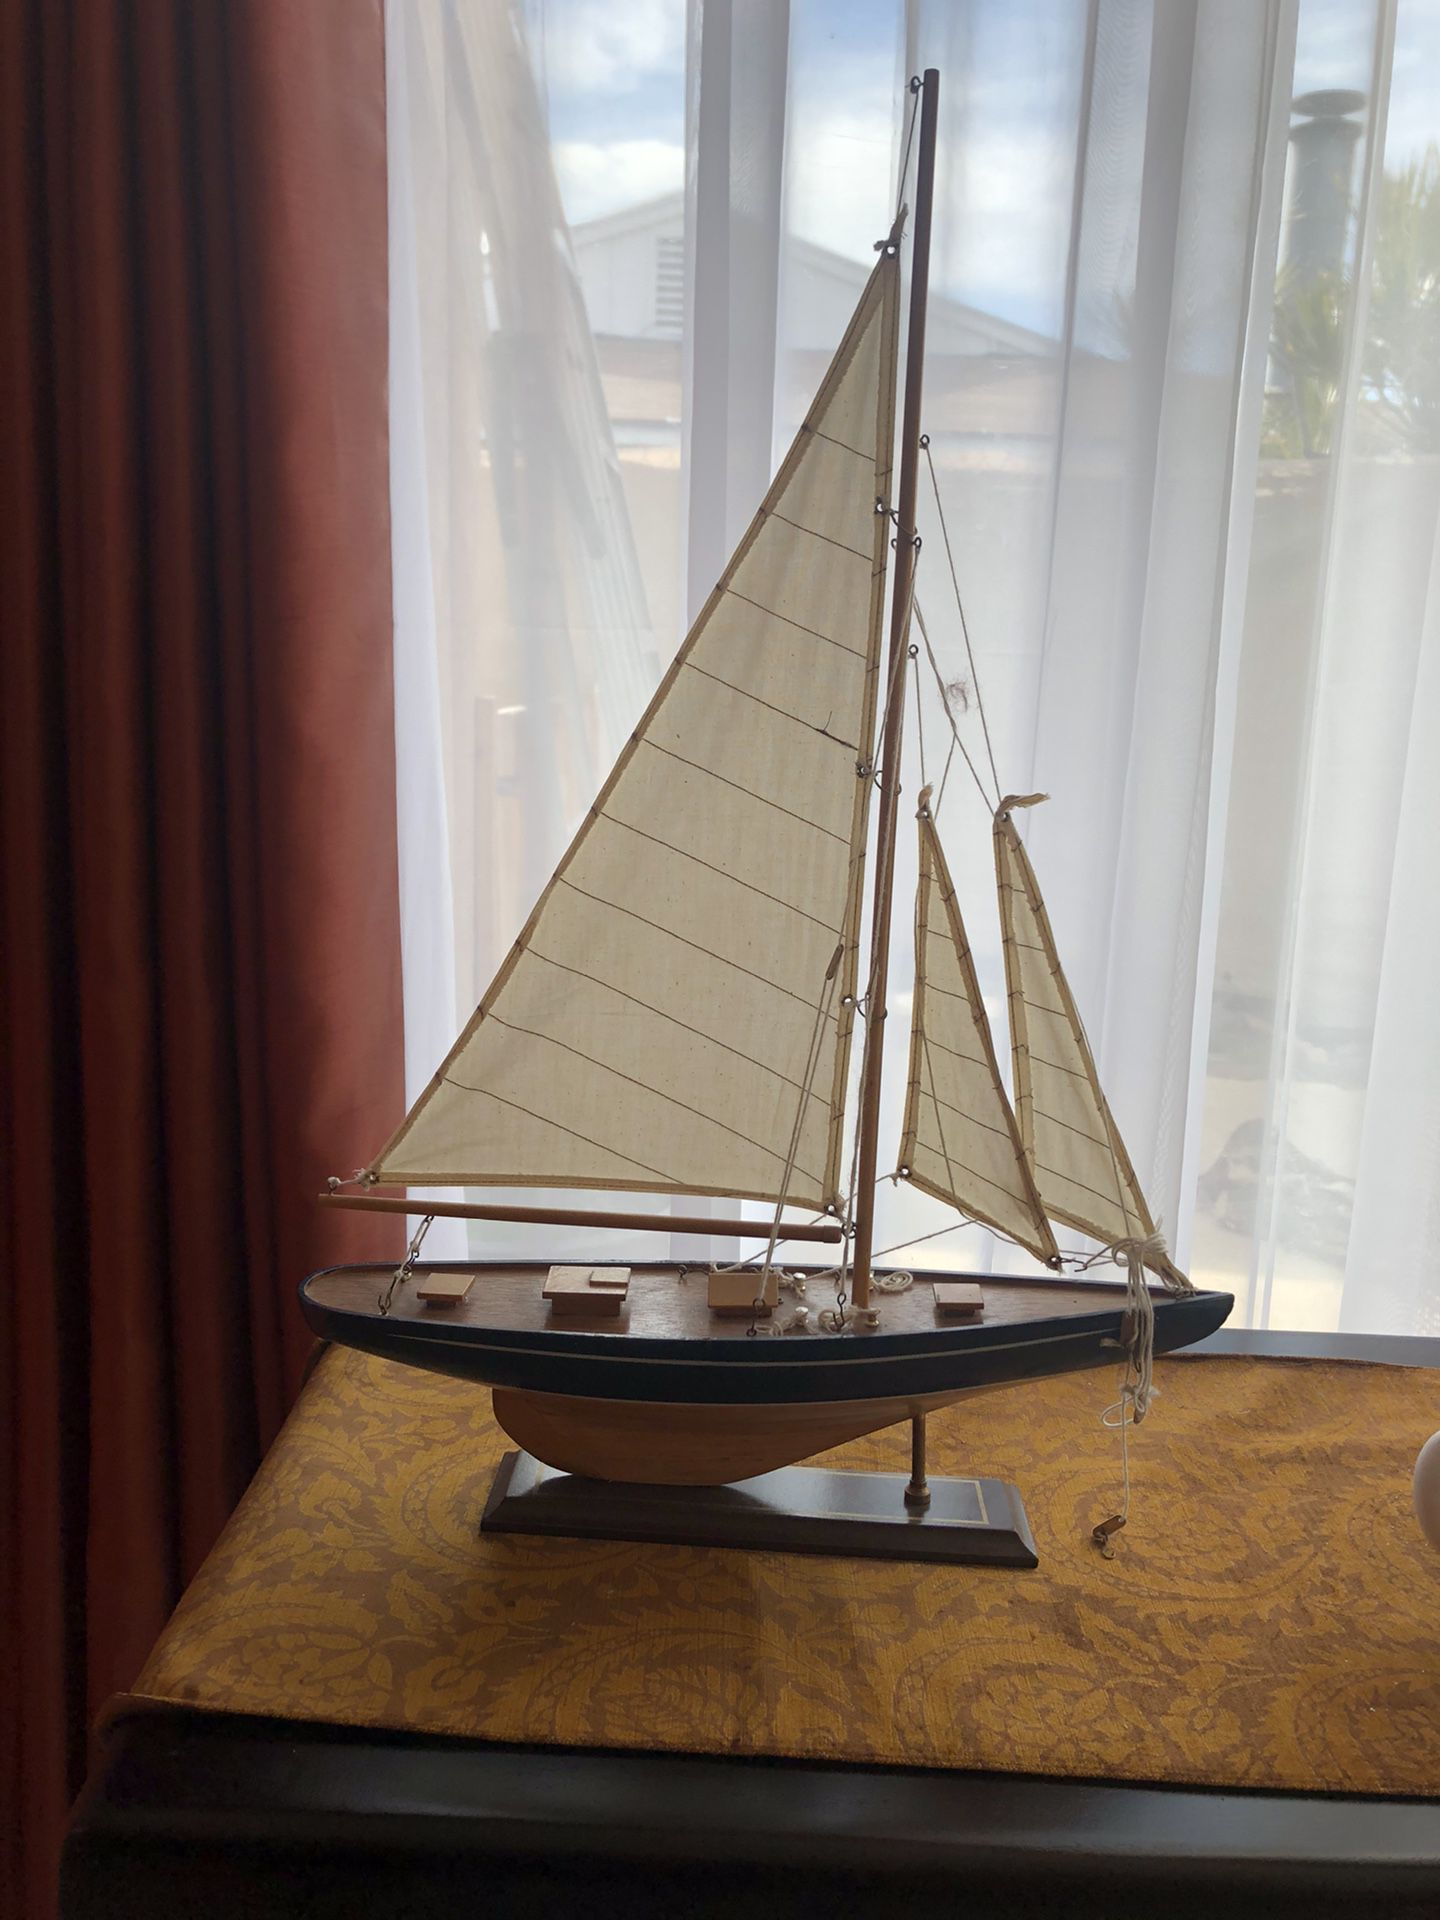 Collectible sail boat